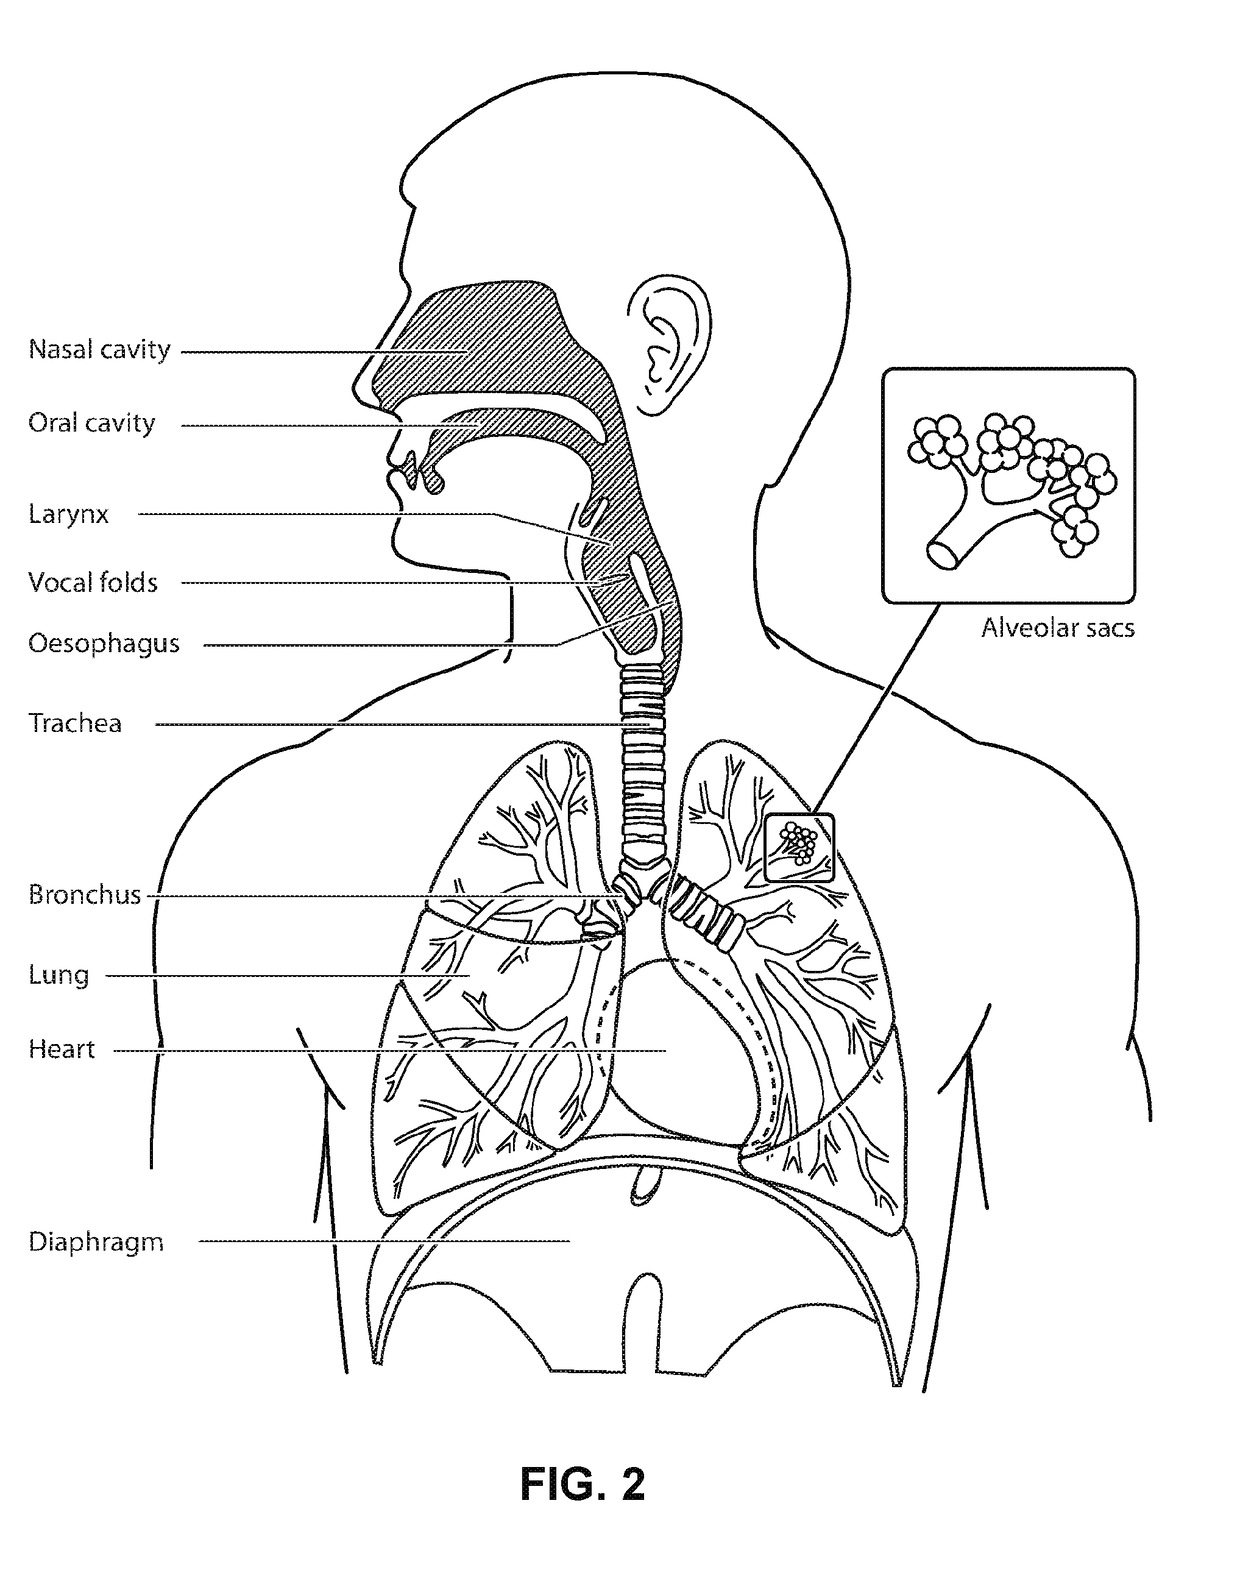 Gas flow regulating apparatus for respiratory treatment